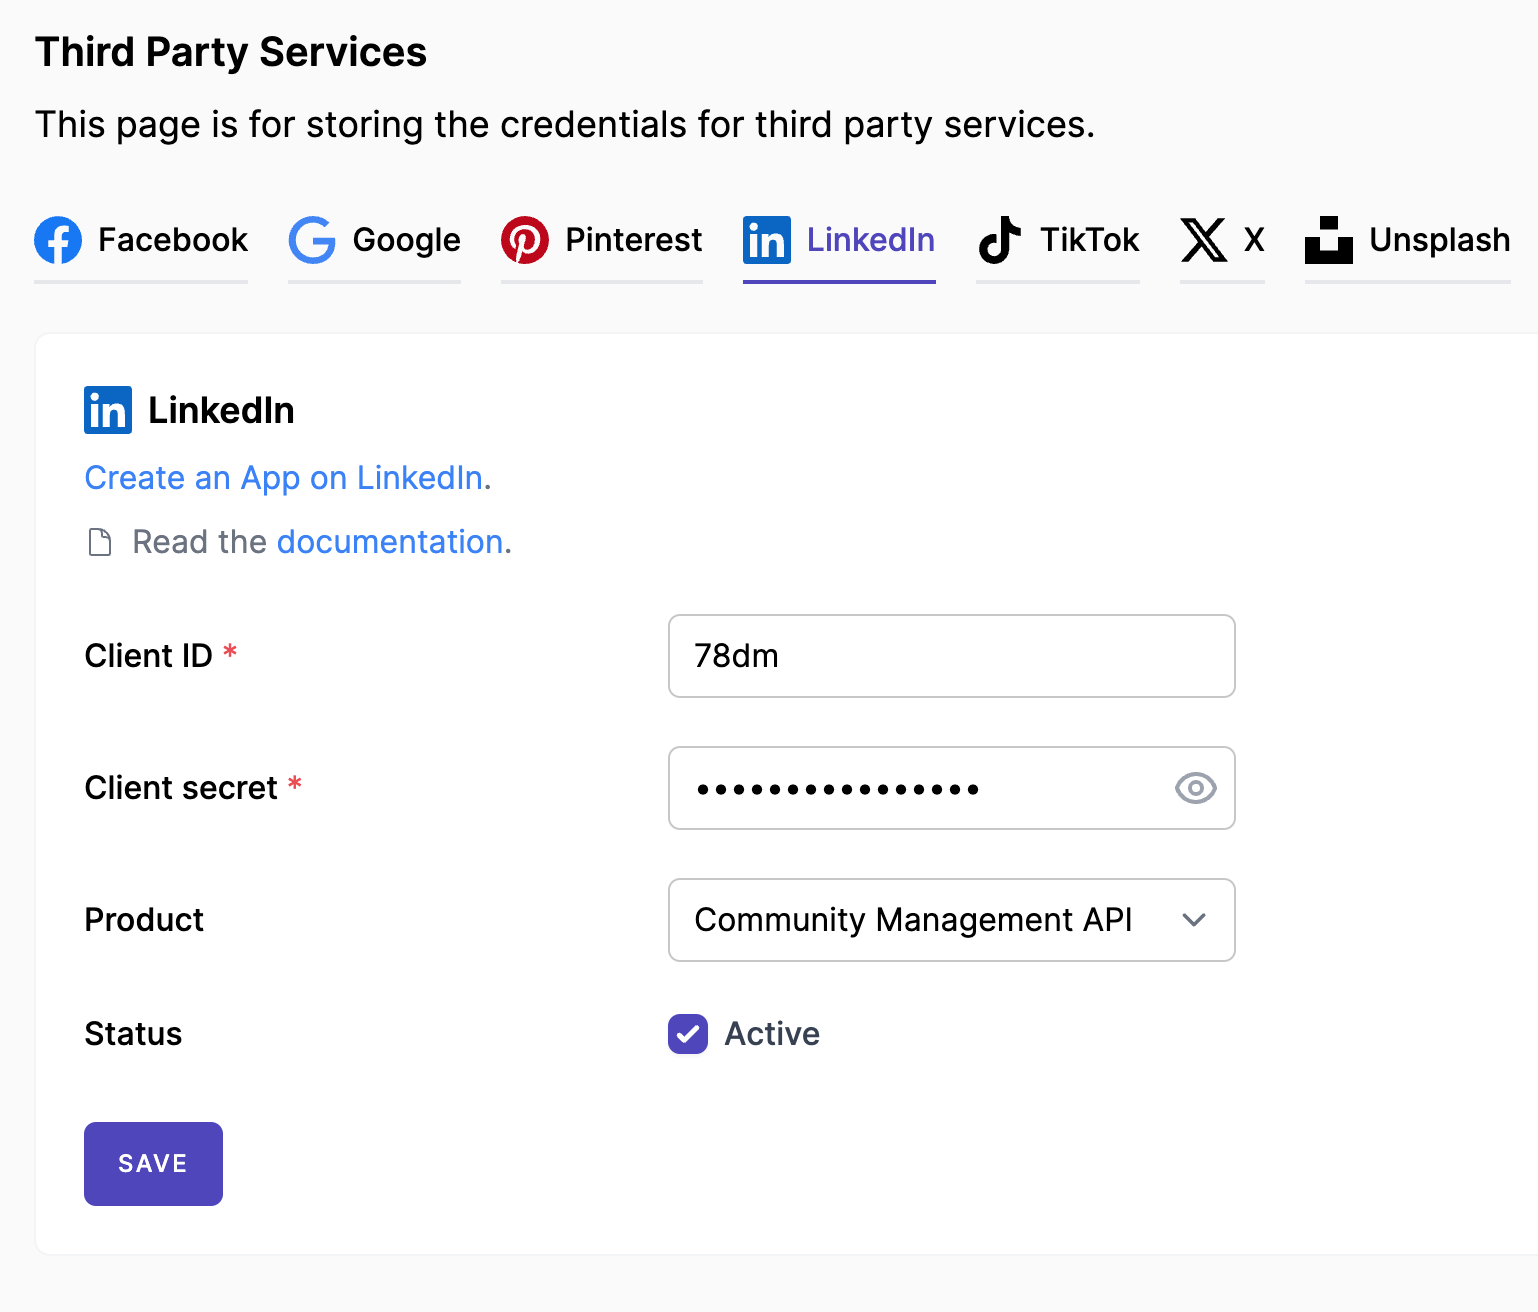 LinkedIn Credentials in Mixpost Dashboard